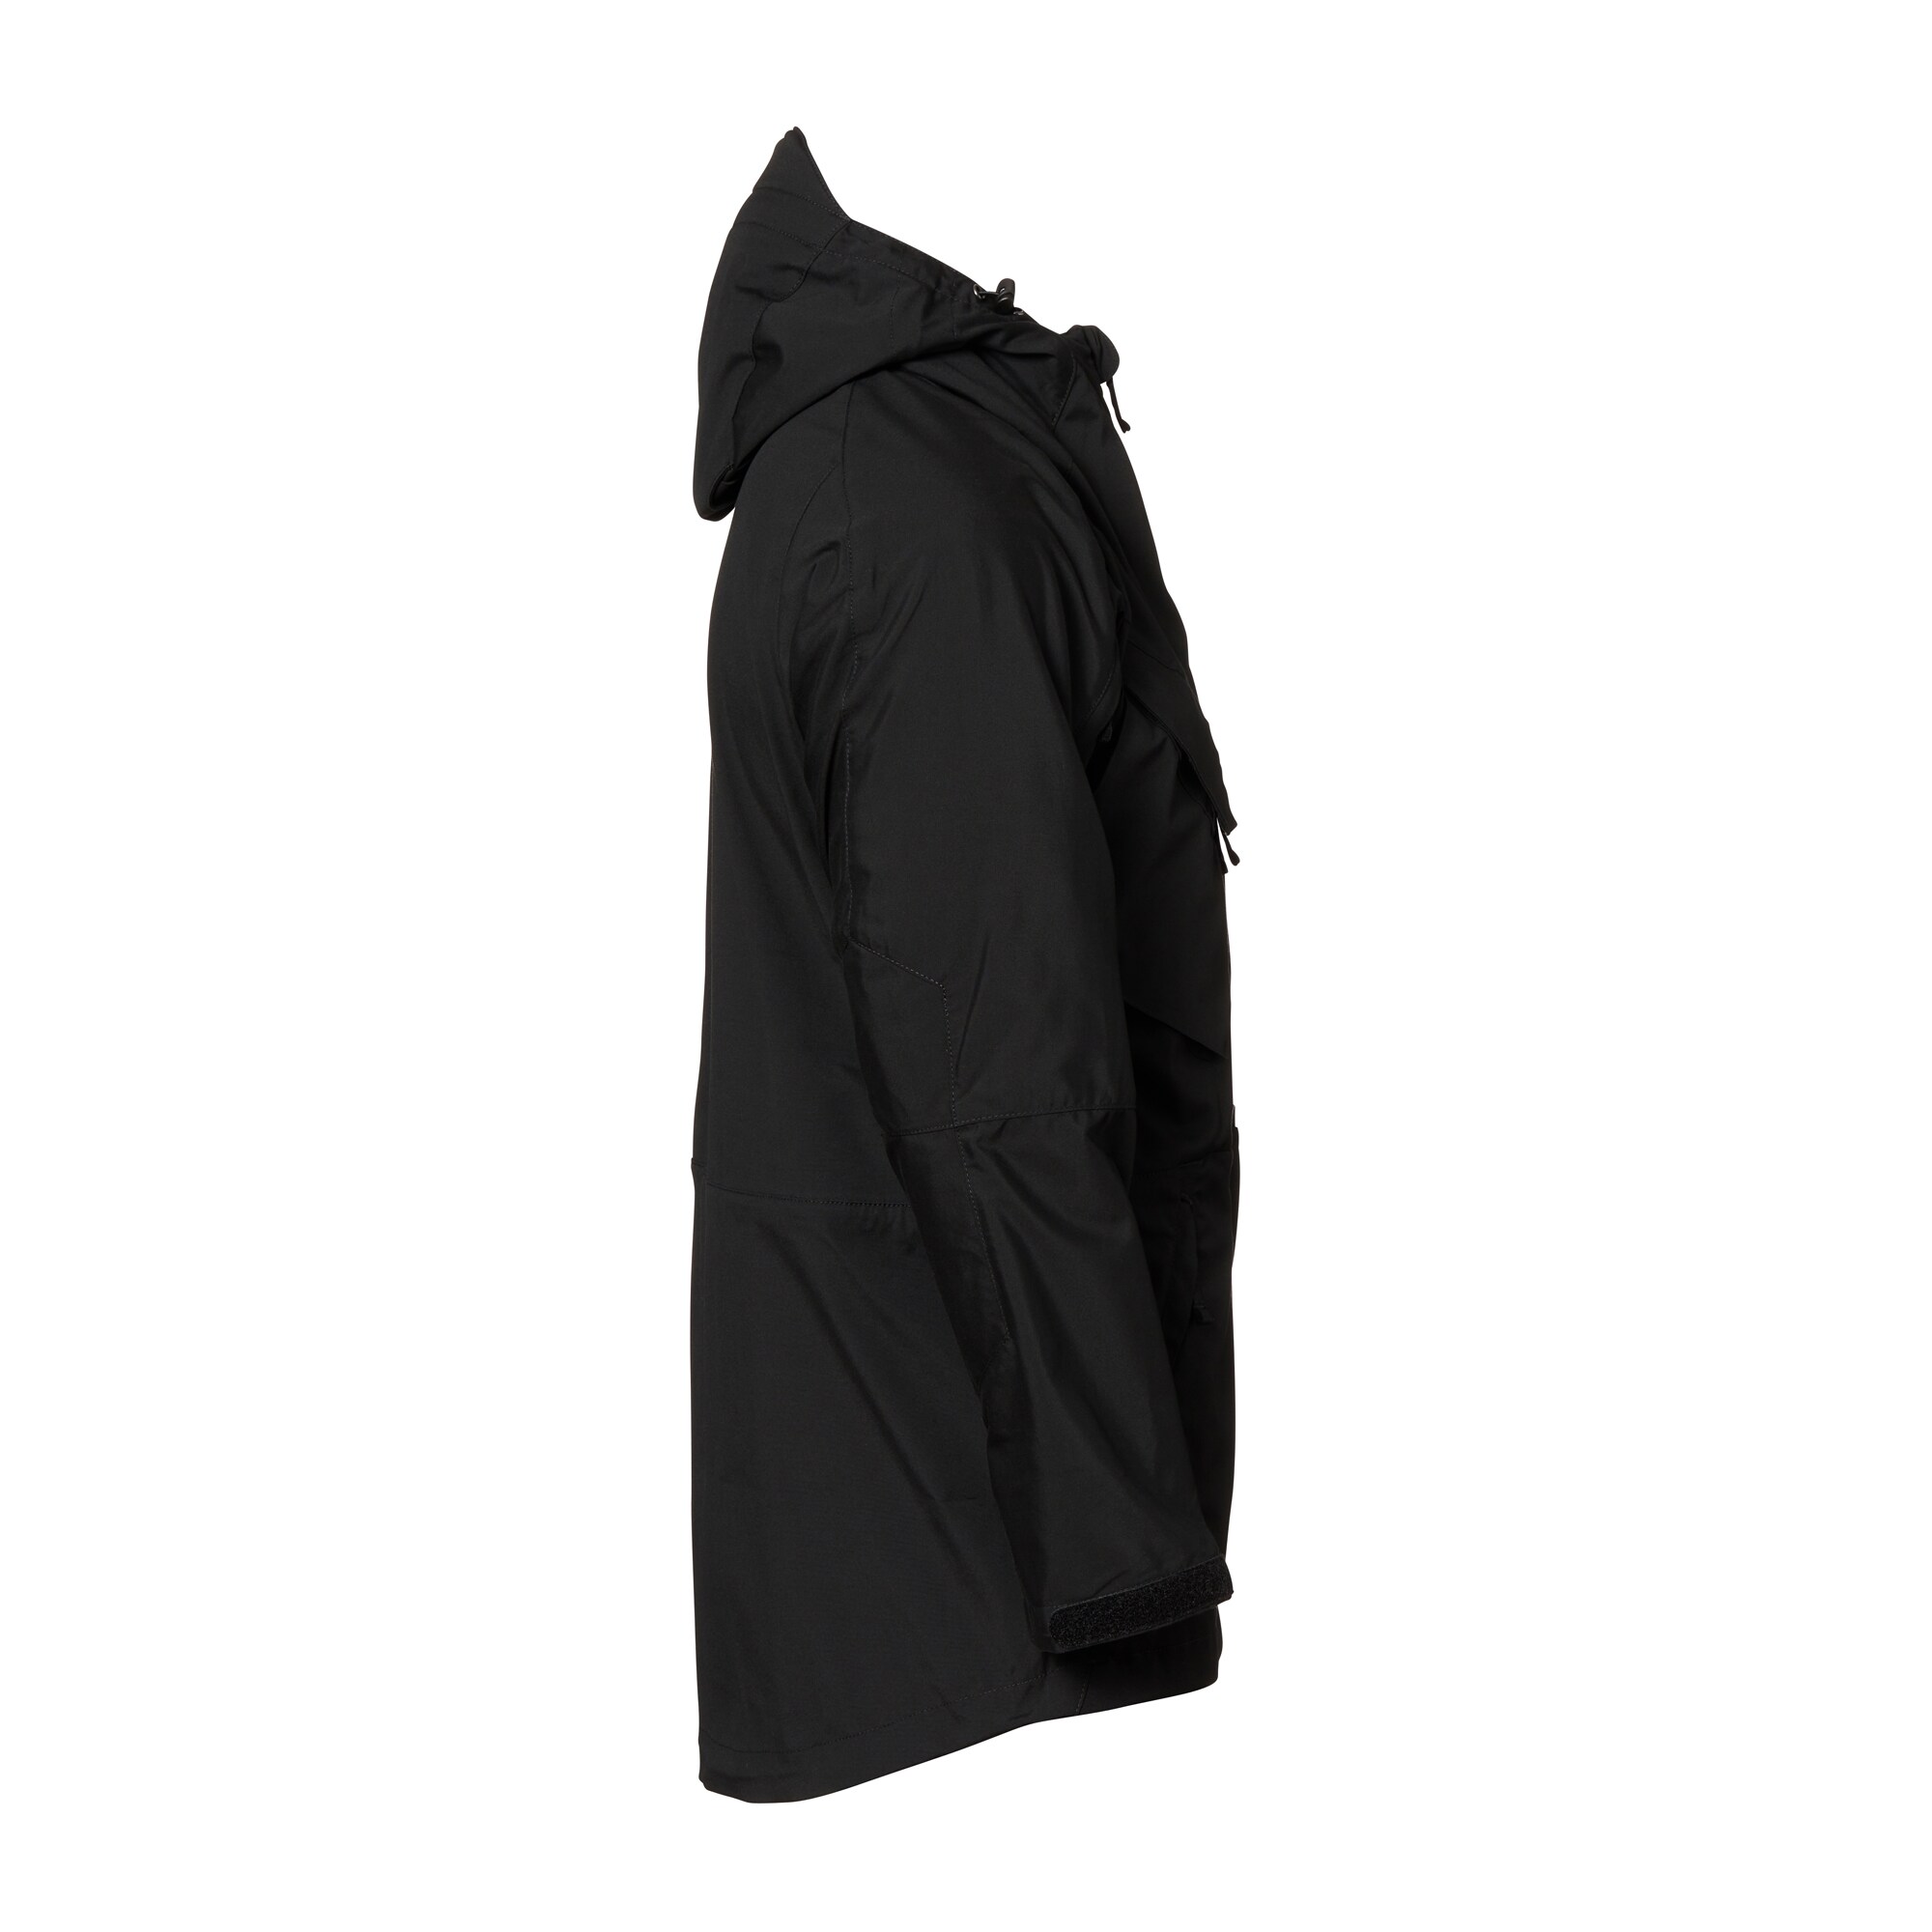 Purchase the Helikon-Tex Pilgrim Anorak Jacket black by ASMC